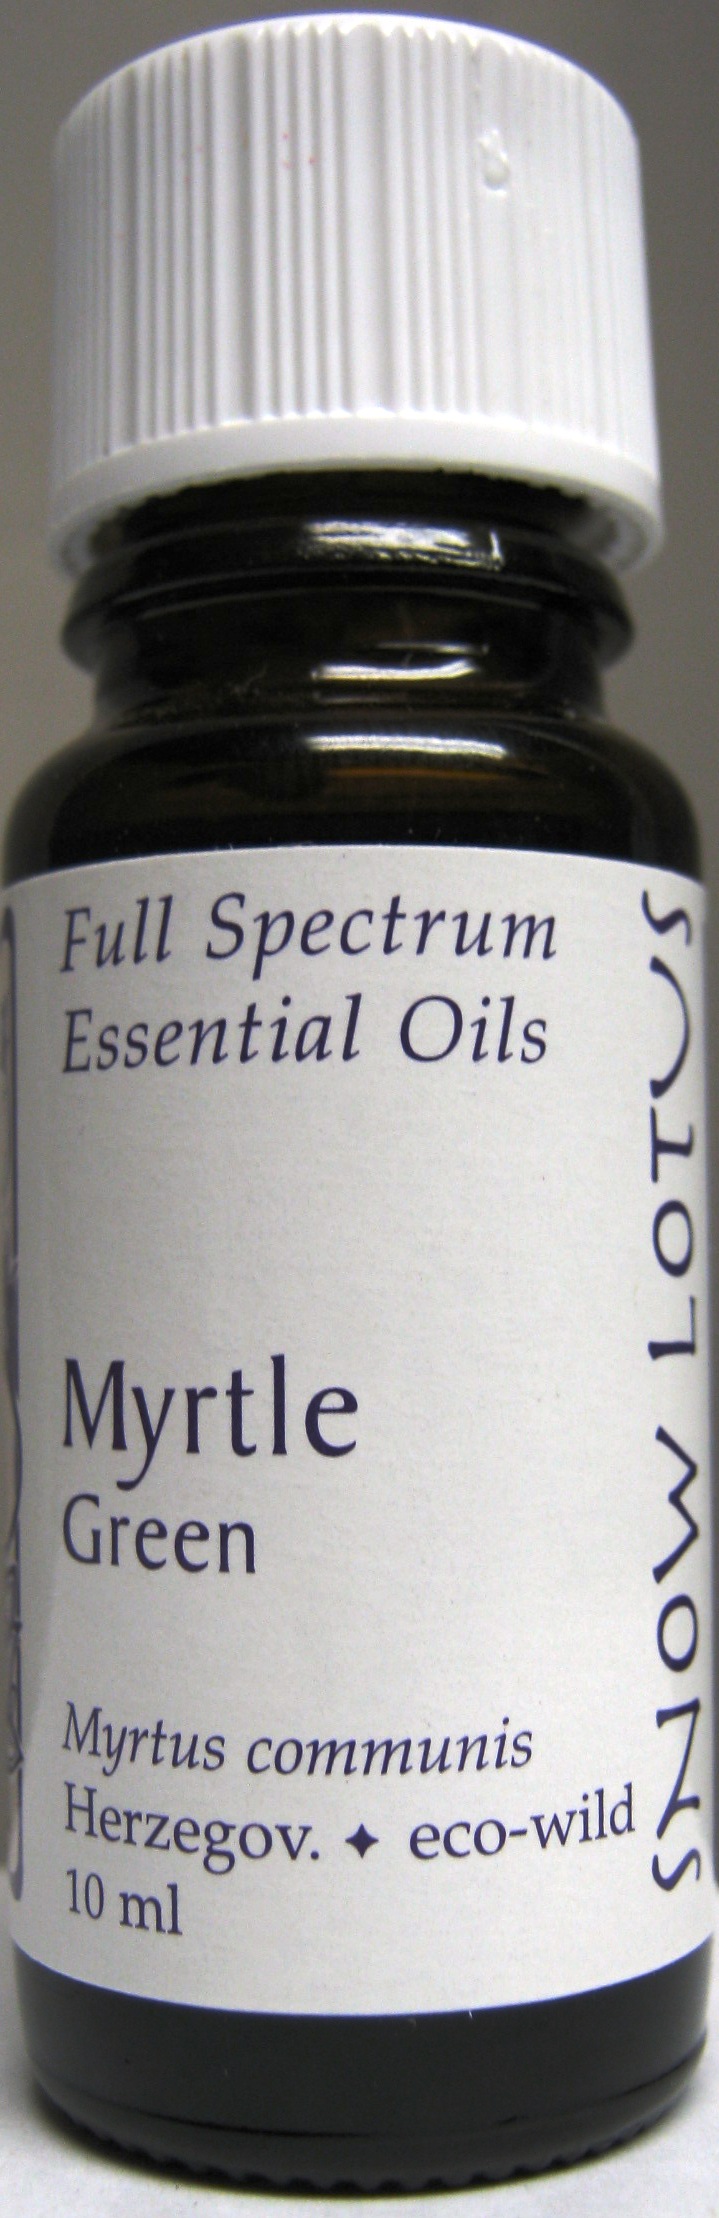 Myrtle (green) Essential Oil